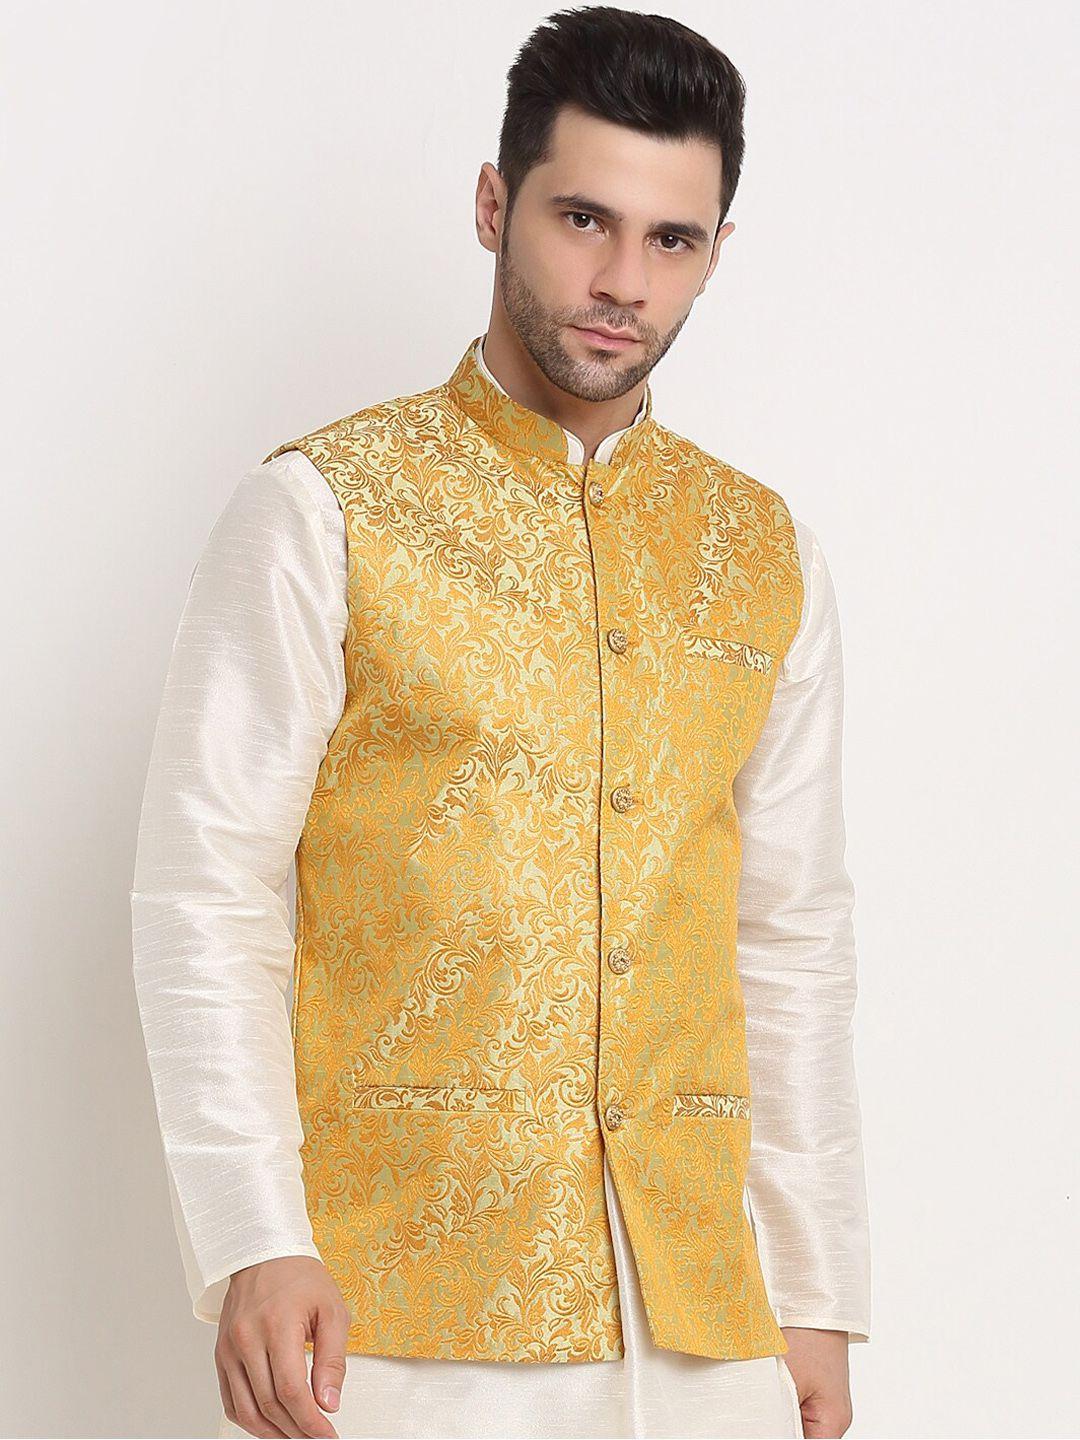 kraft india men gold-toned jacquard woven design nehru jacket